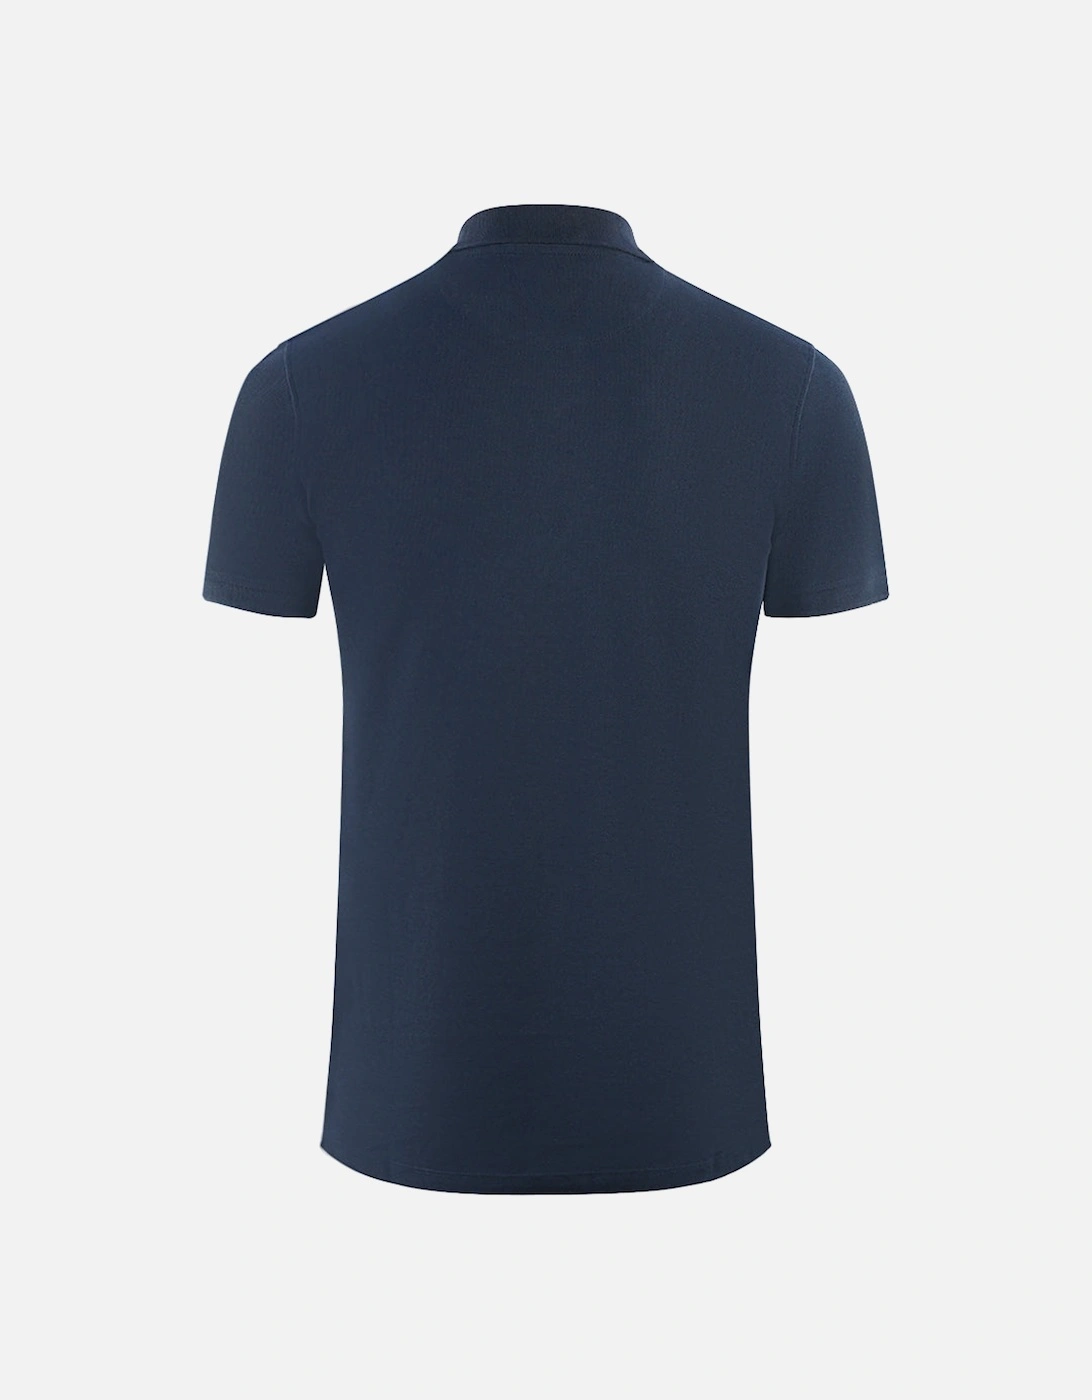 Branded Sleeve Navy Blue Polo Shirt